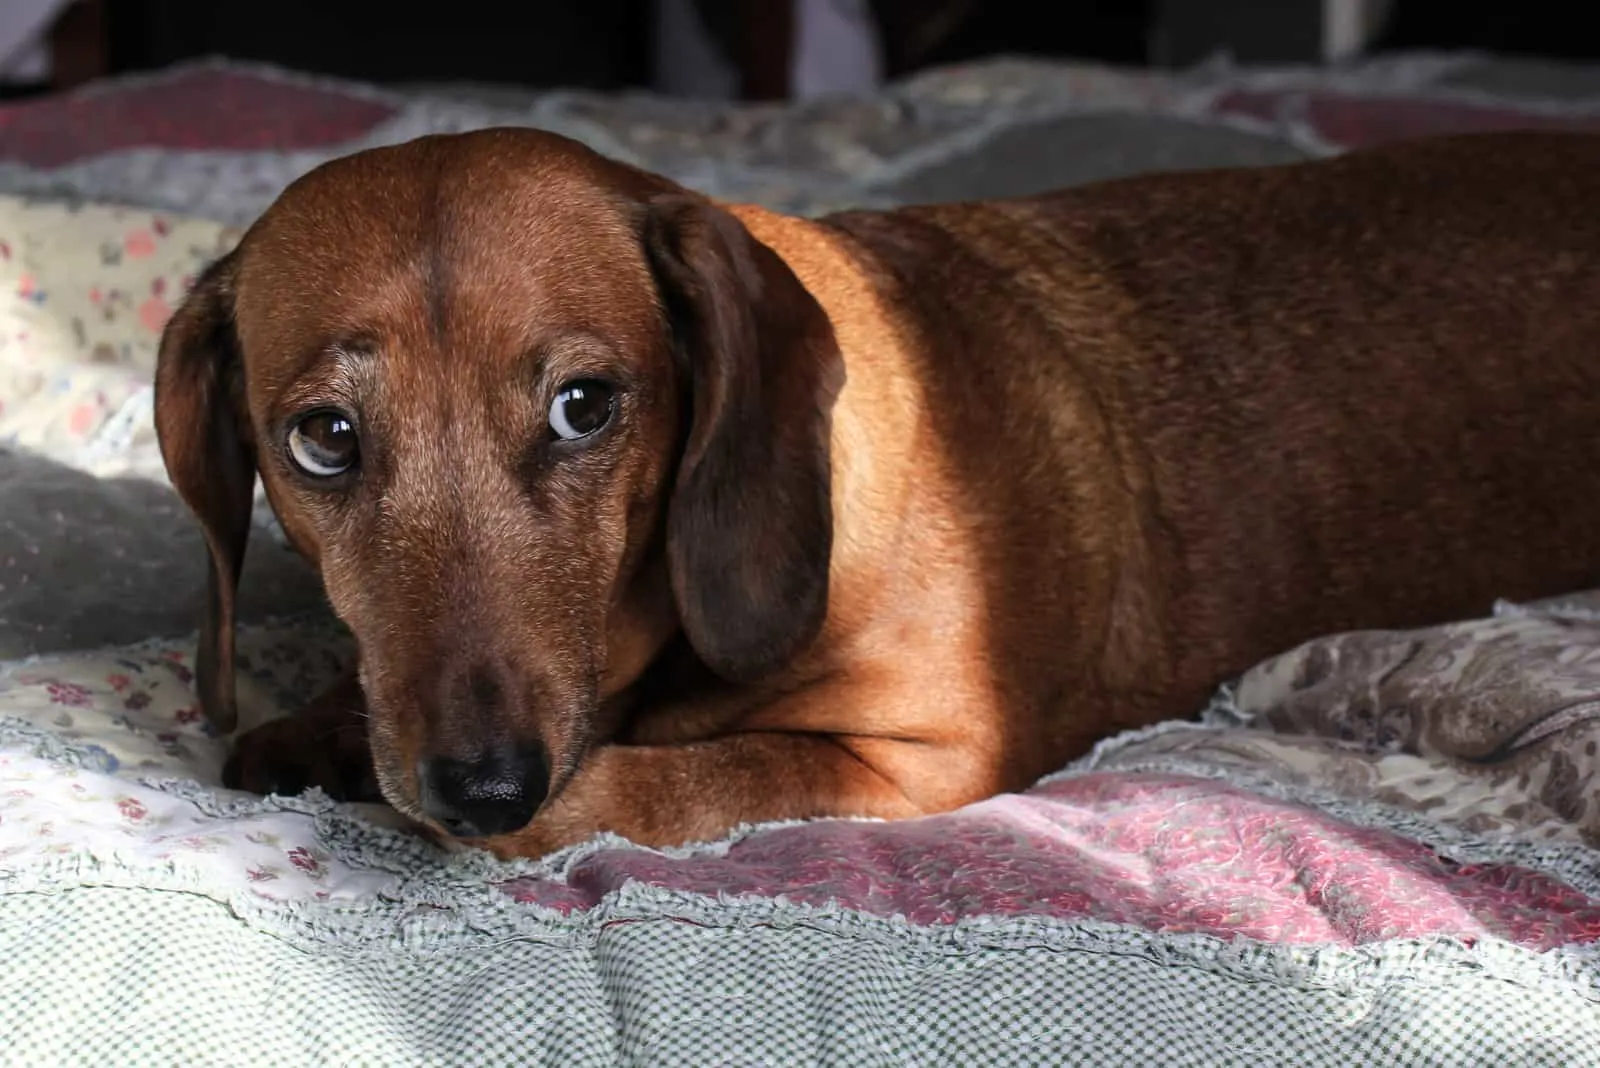 dachshund dog lying on the bed